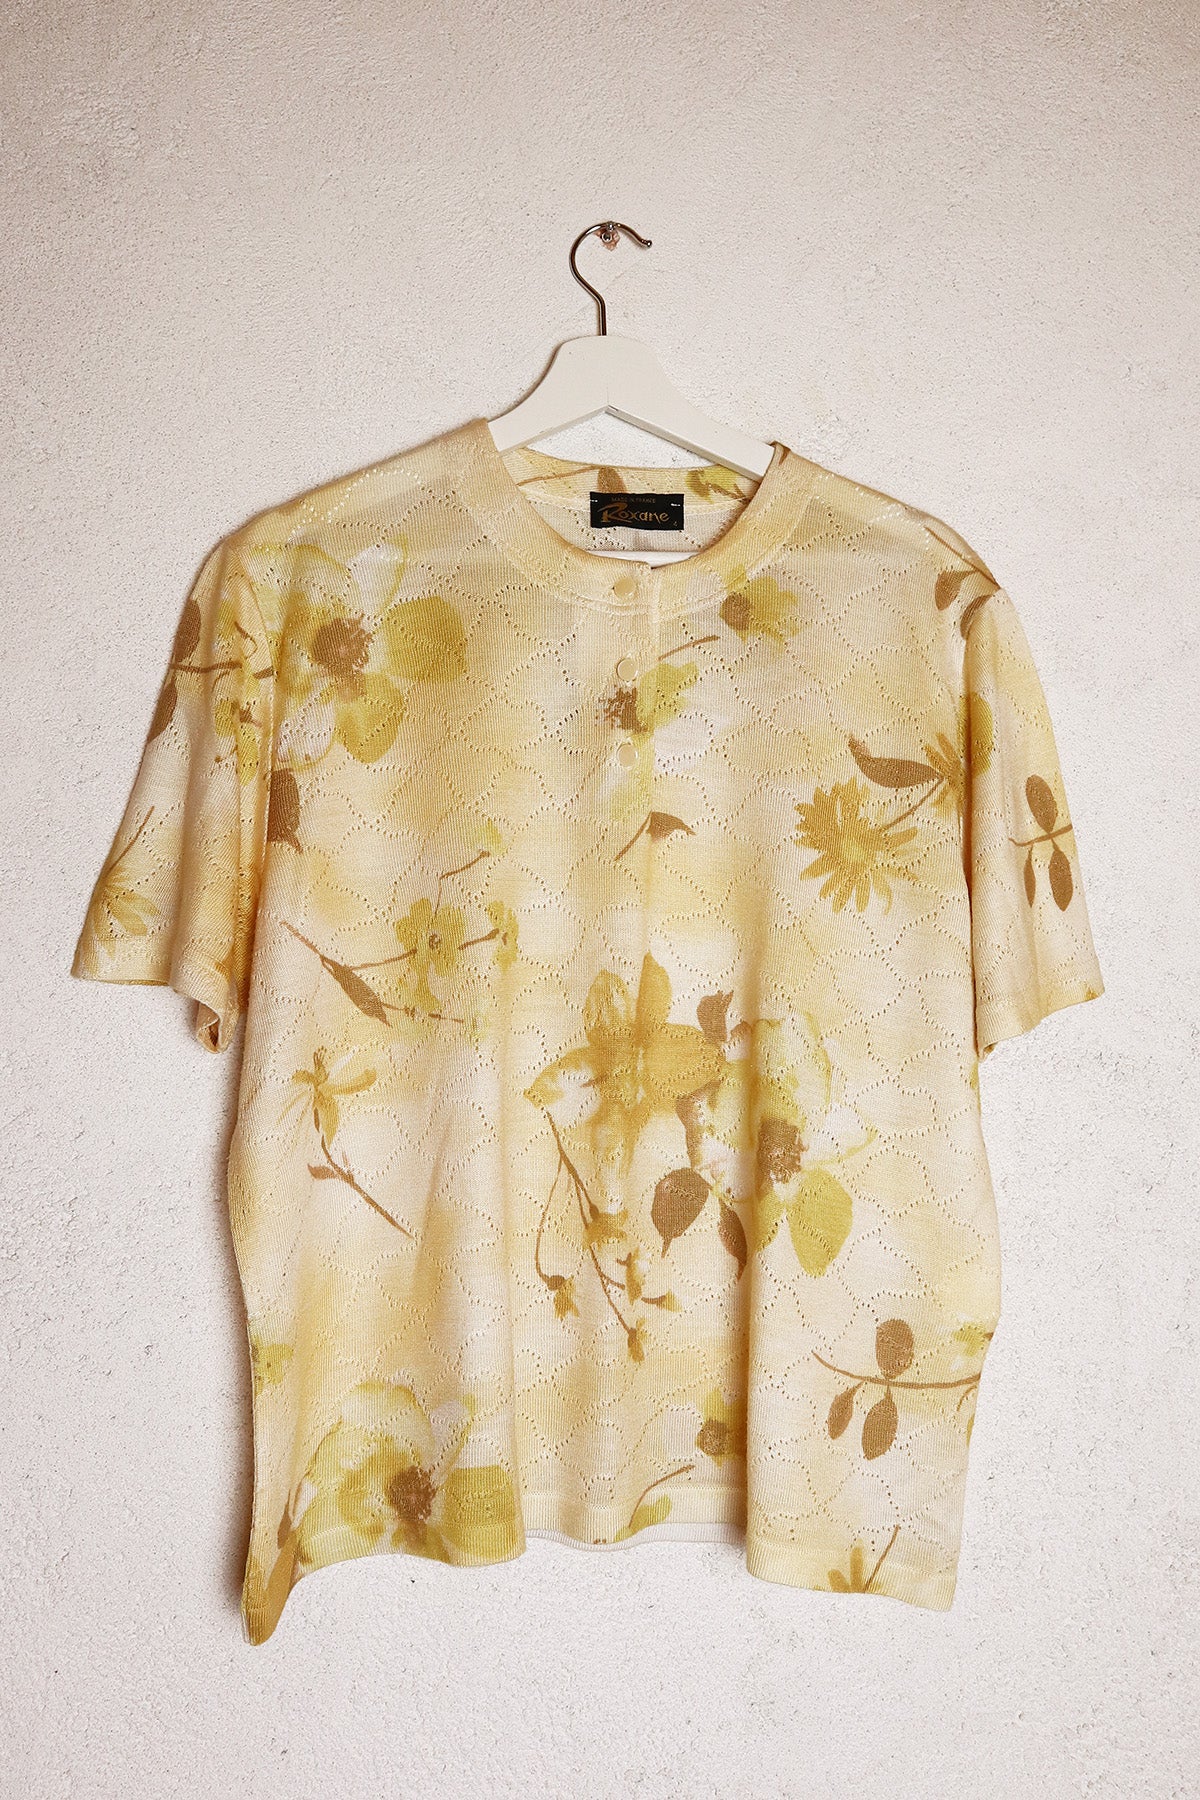 T-Shirt Vintage Zarte Blumen ( Gr. M/L )